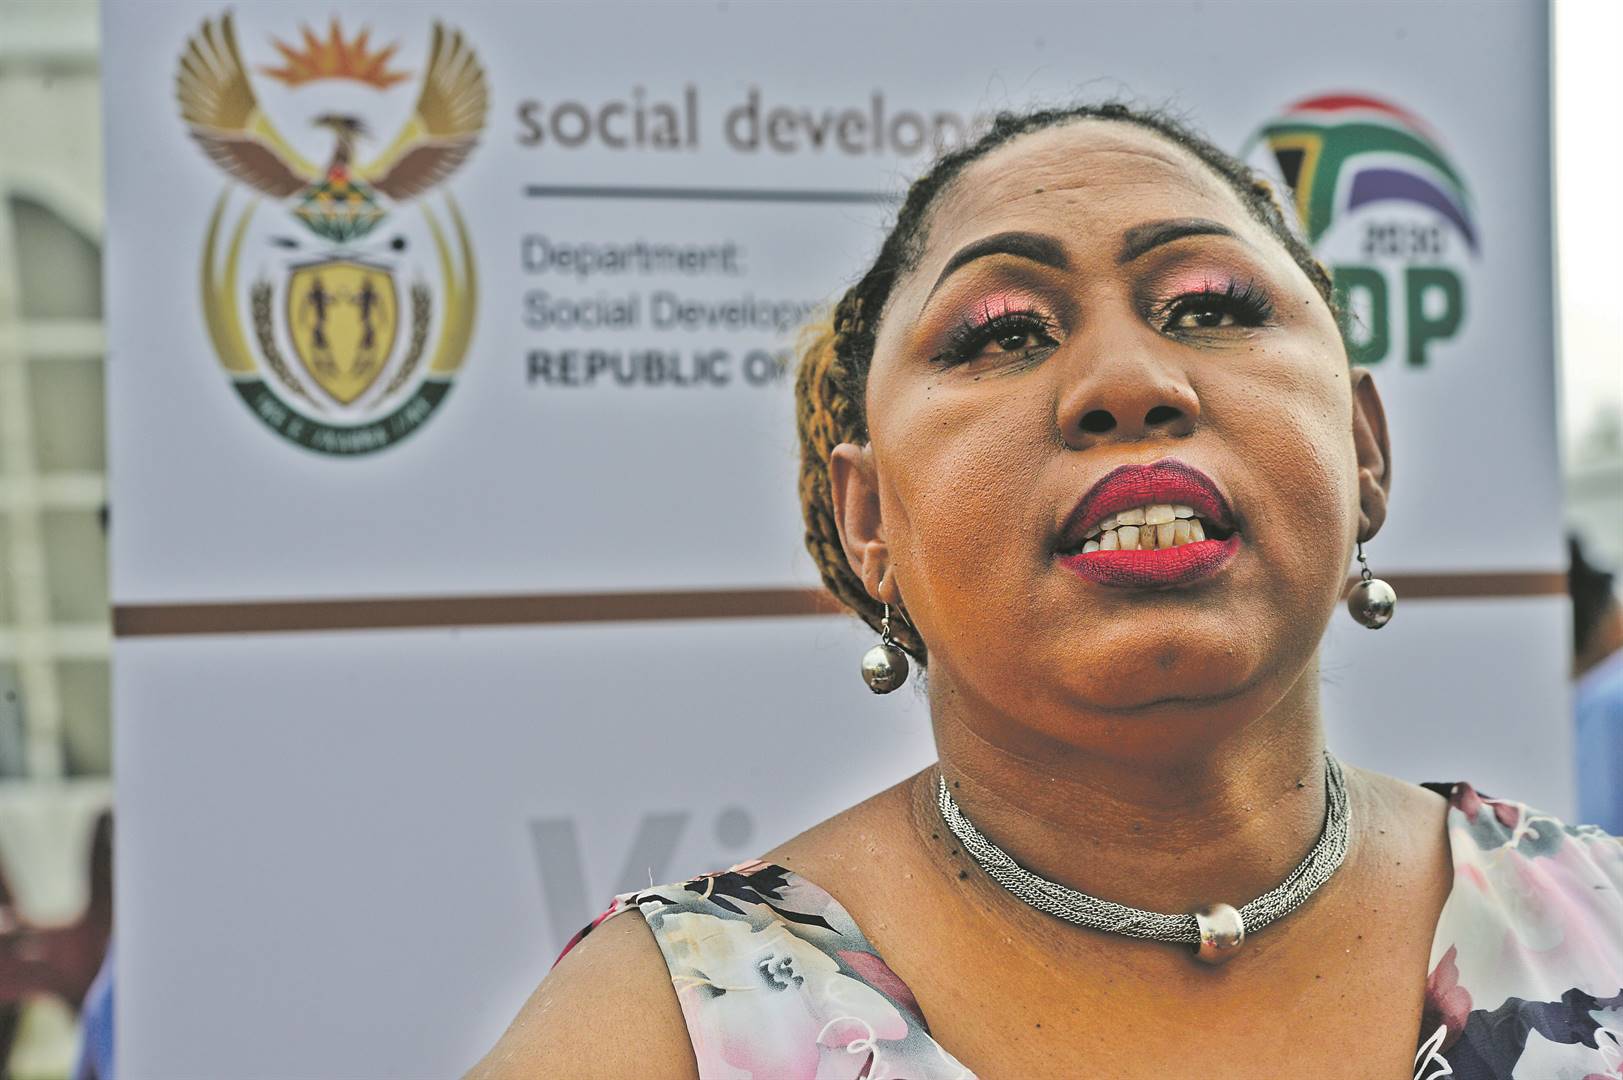 Deputy Minister of Social Development Hendrietta-Bogopane-Zulu. Picture: Cebile Ntuli